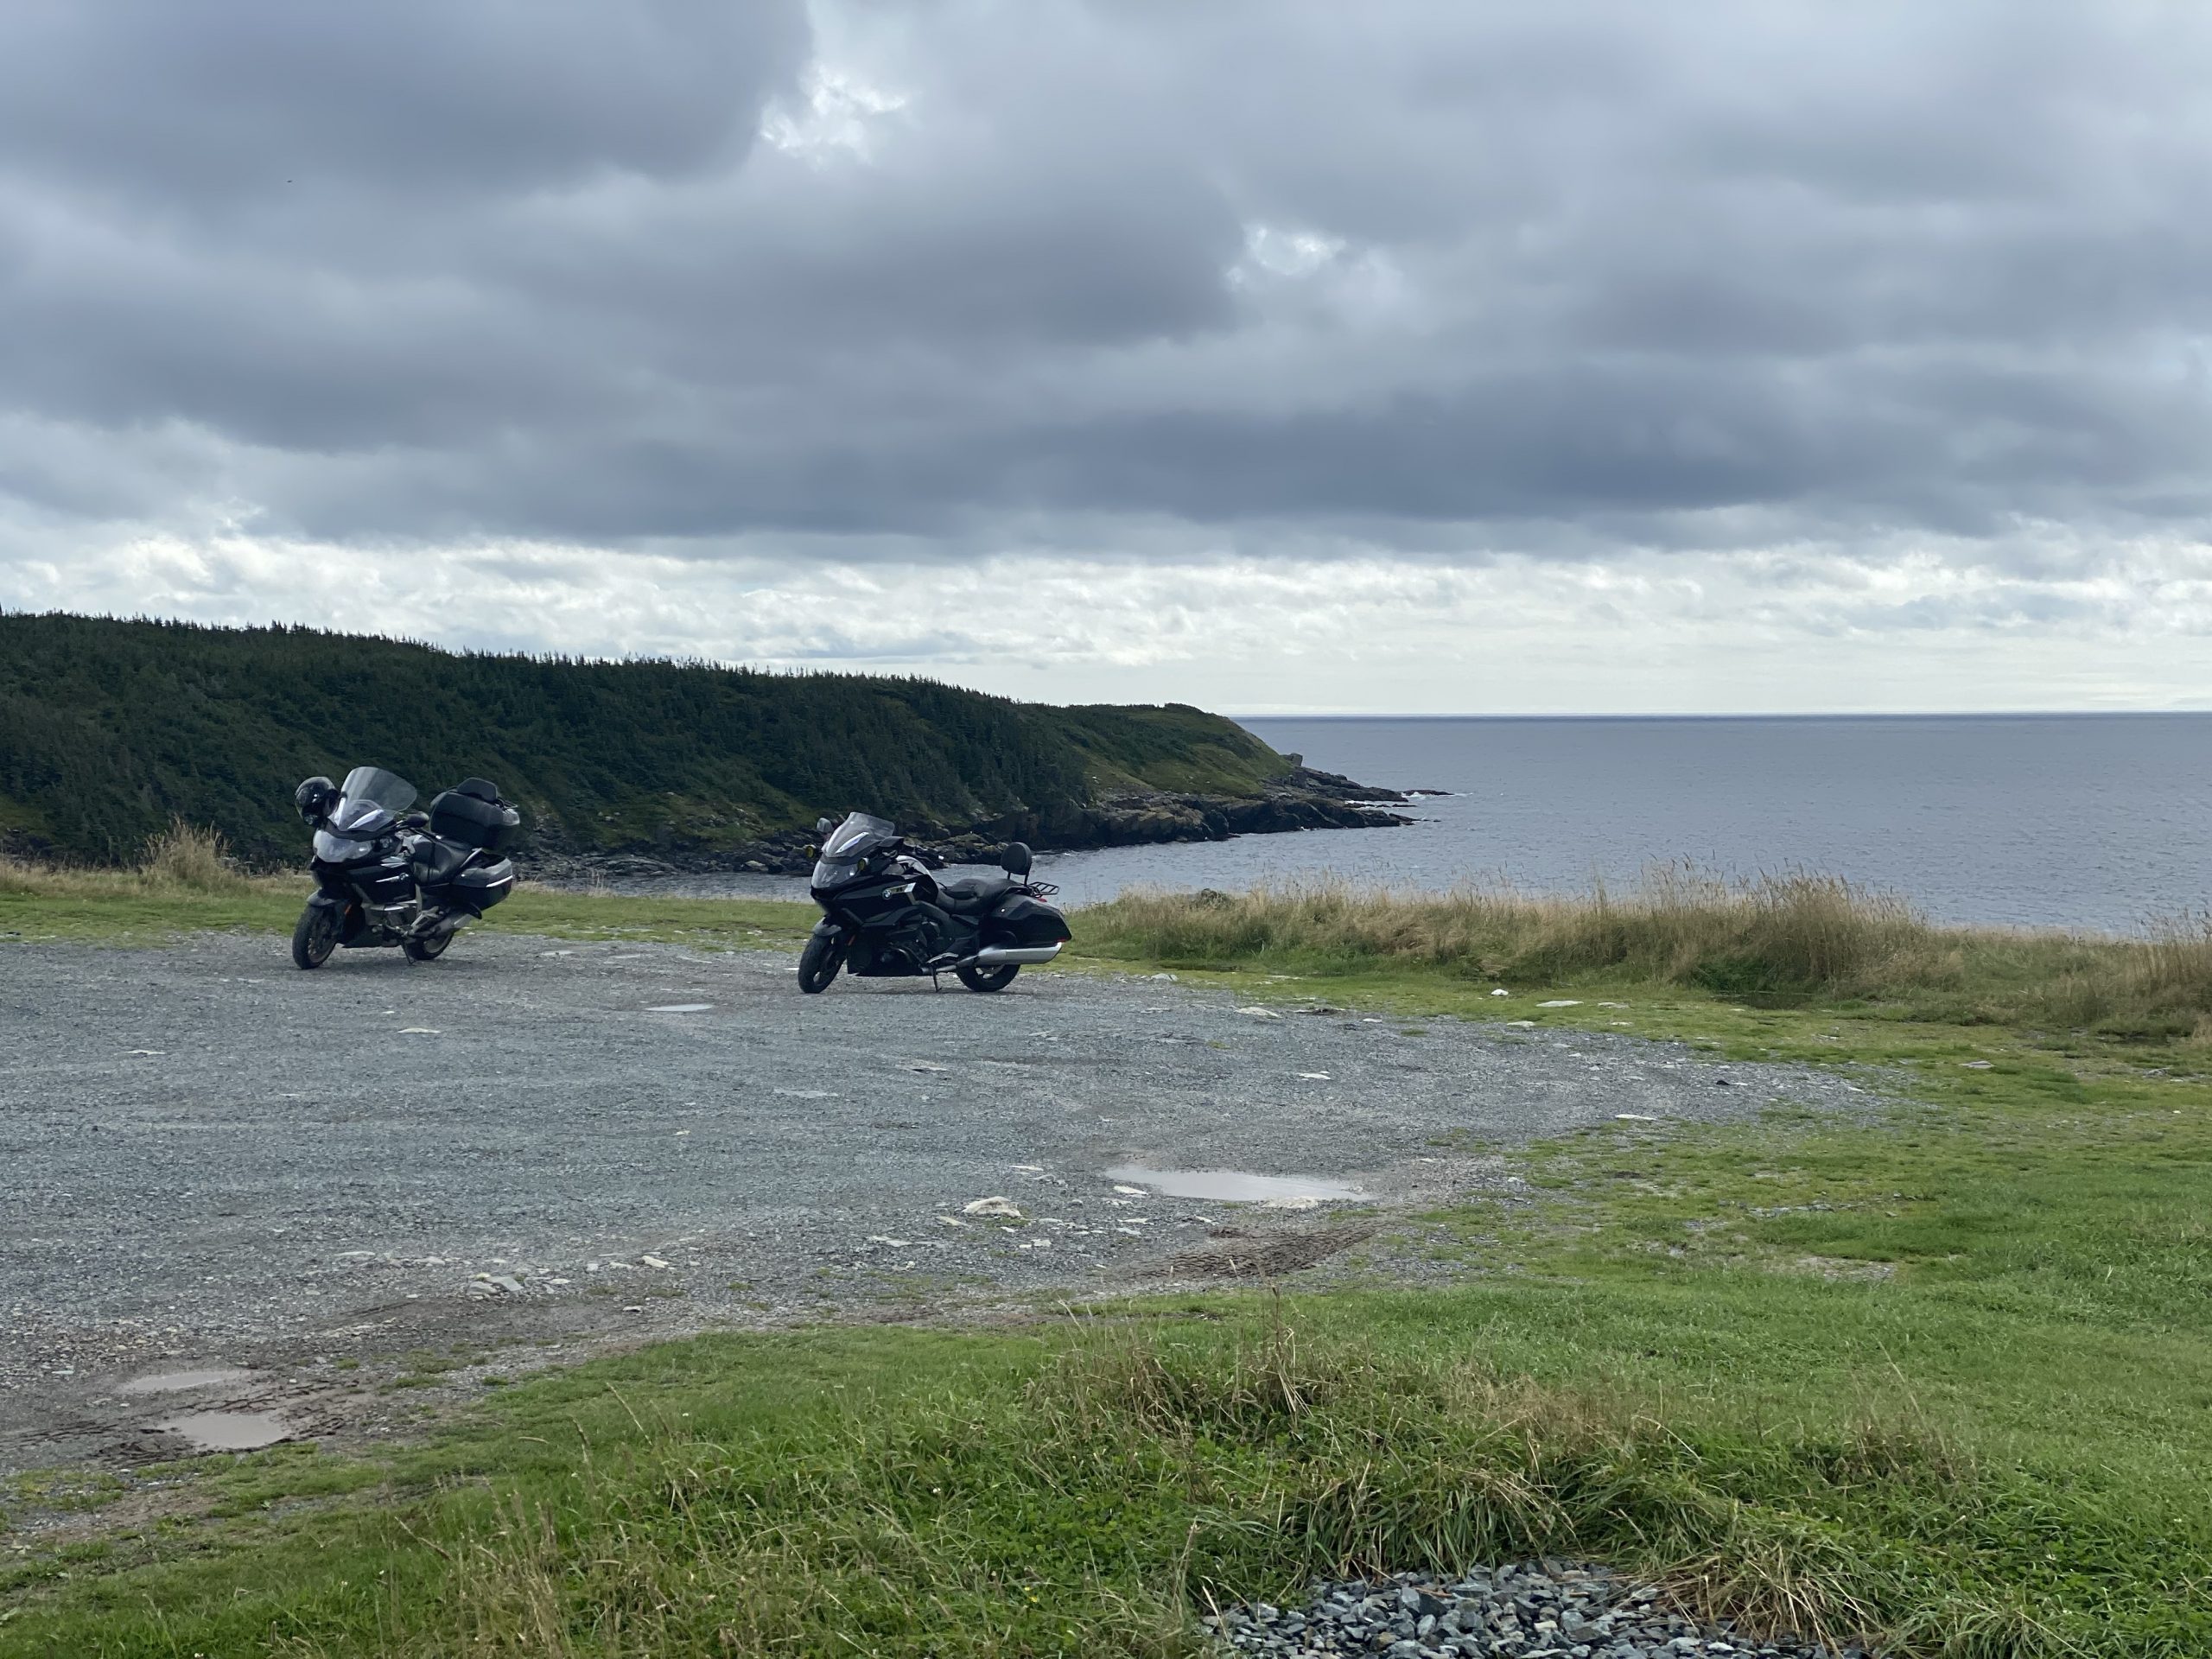 The bikes overlook the Ferryland coastline in Newfoundland.